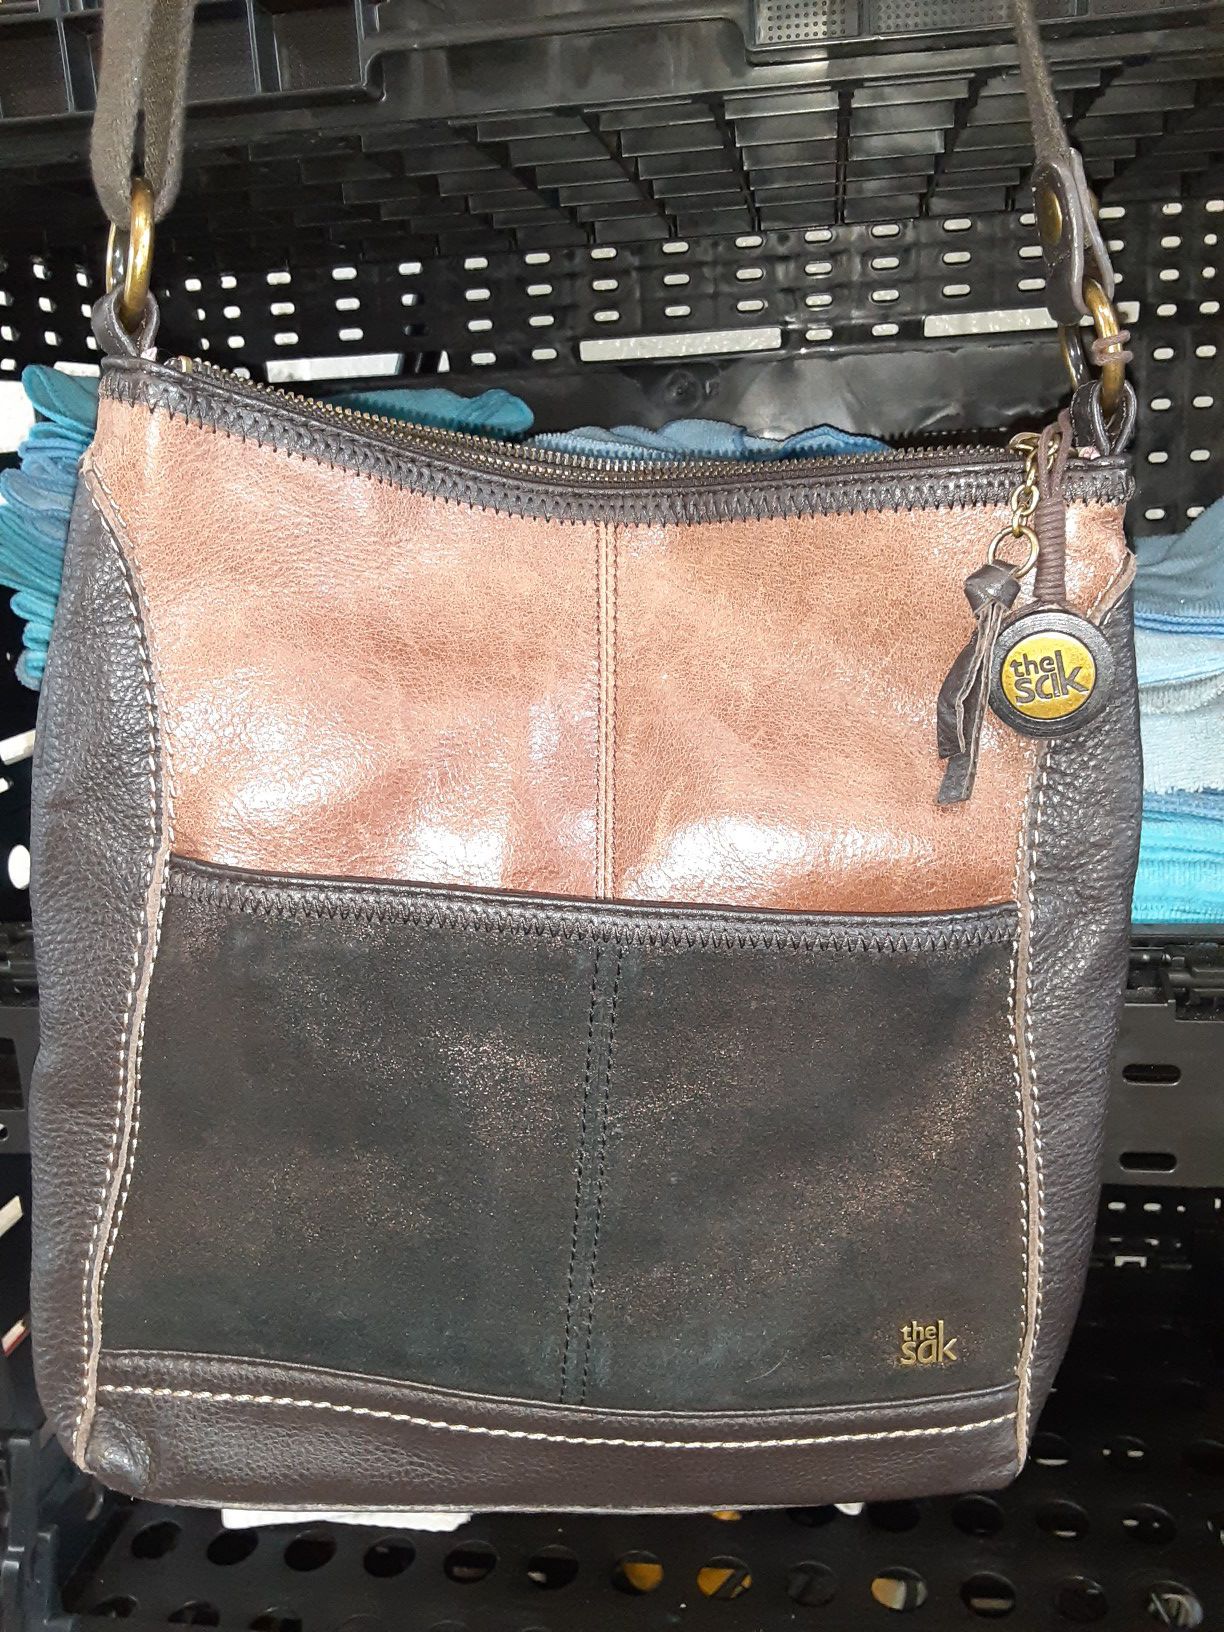 The Sak Leather bag